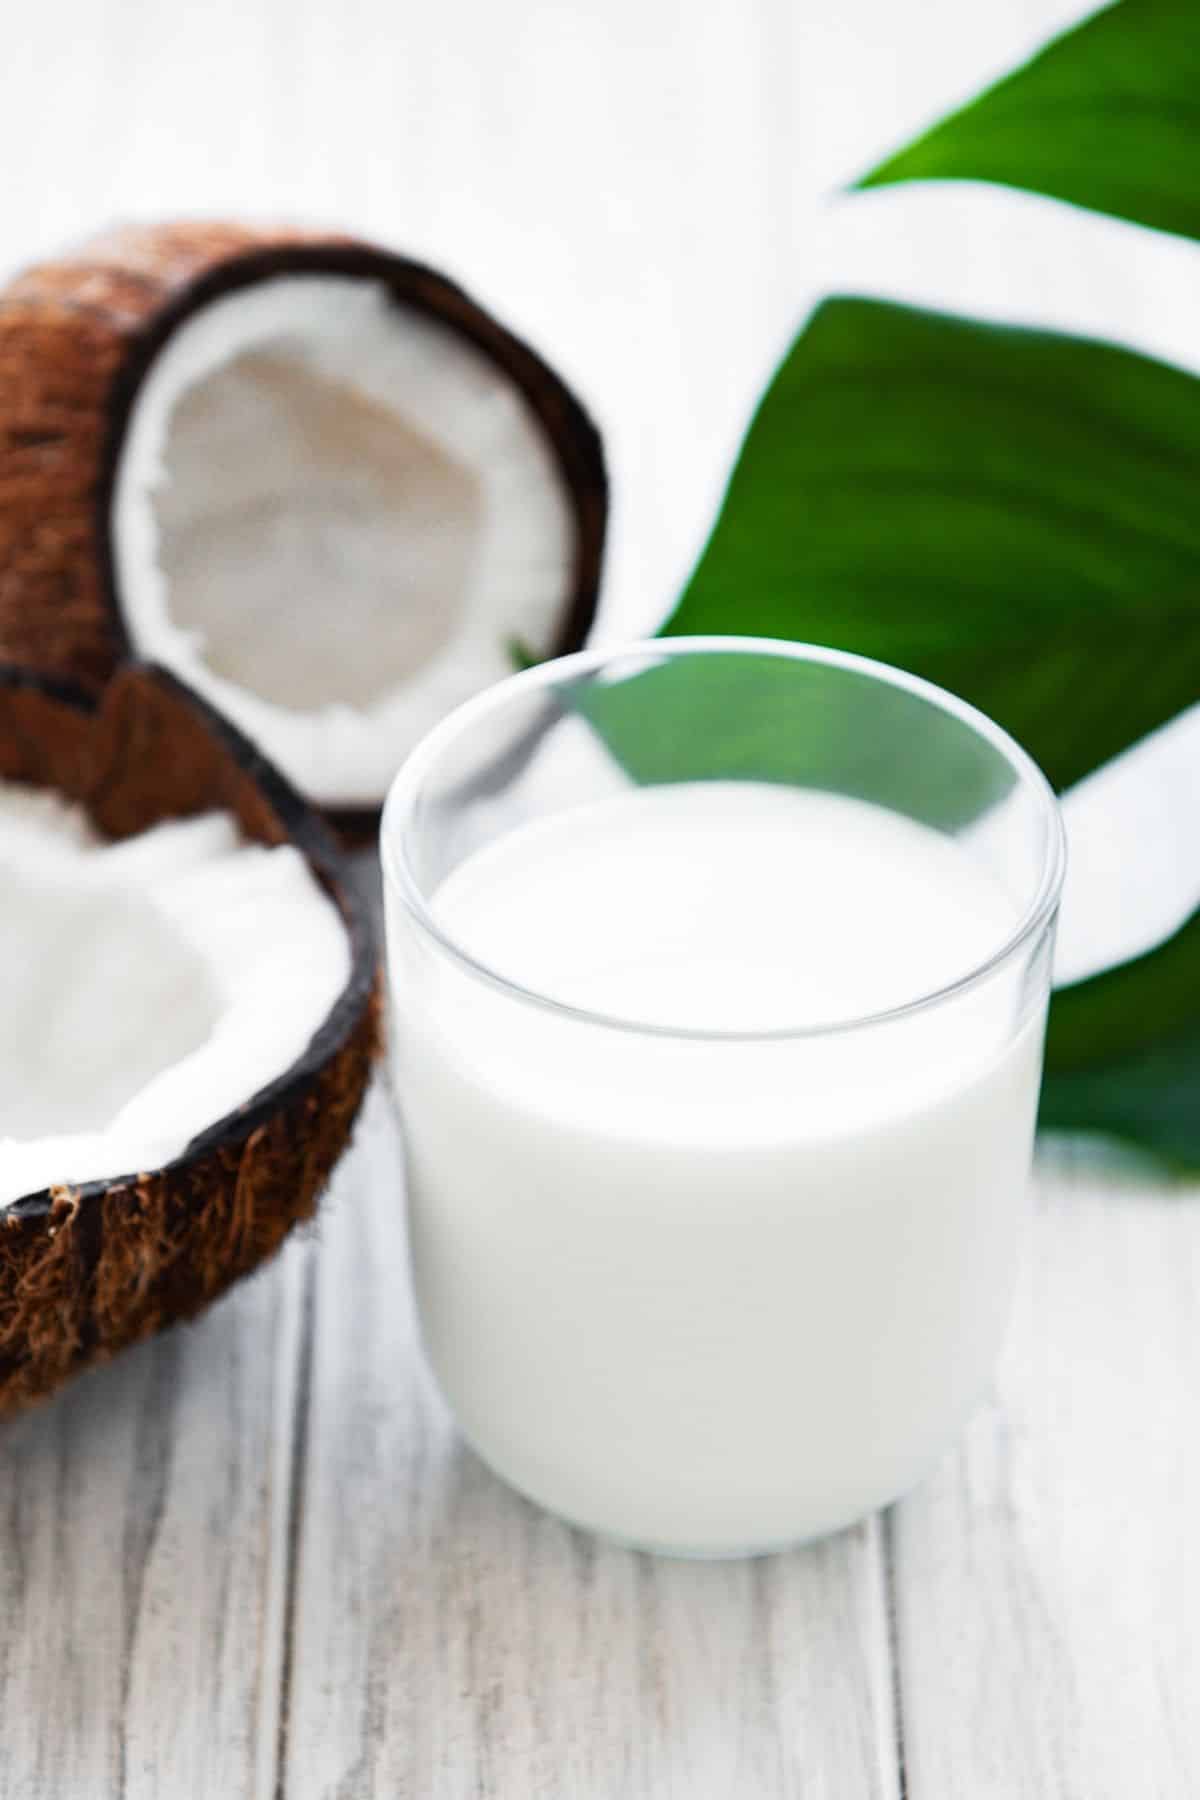 Coconut milk in a glass.